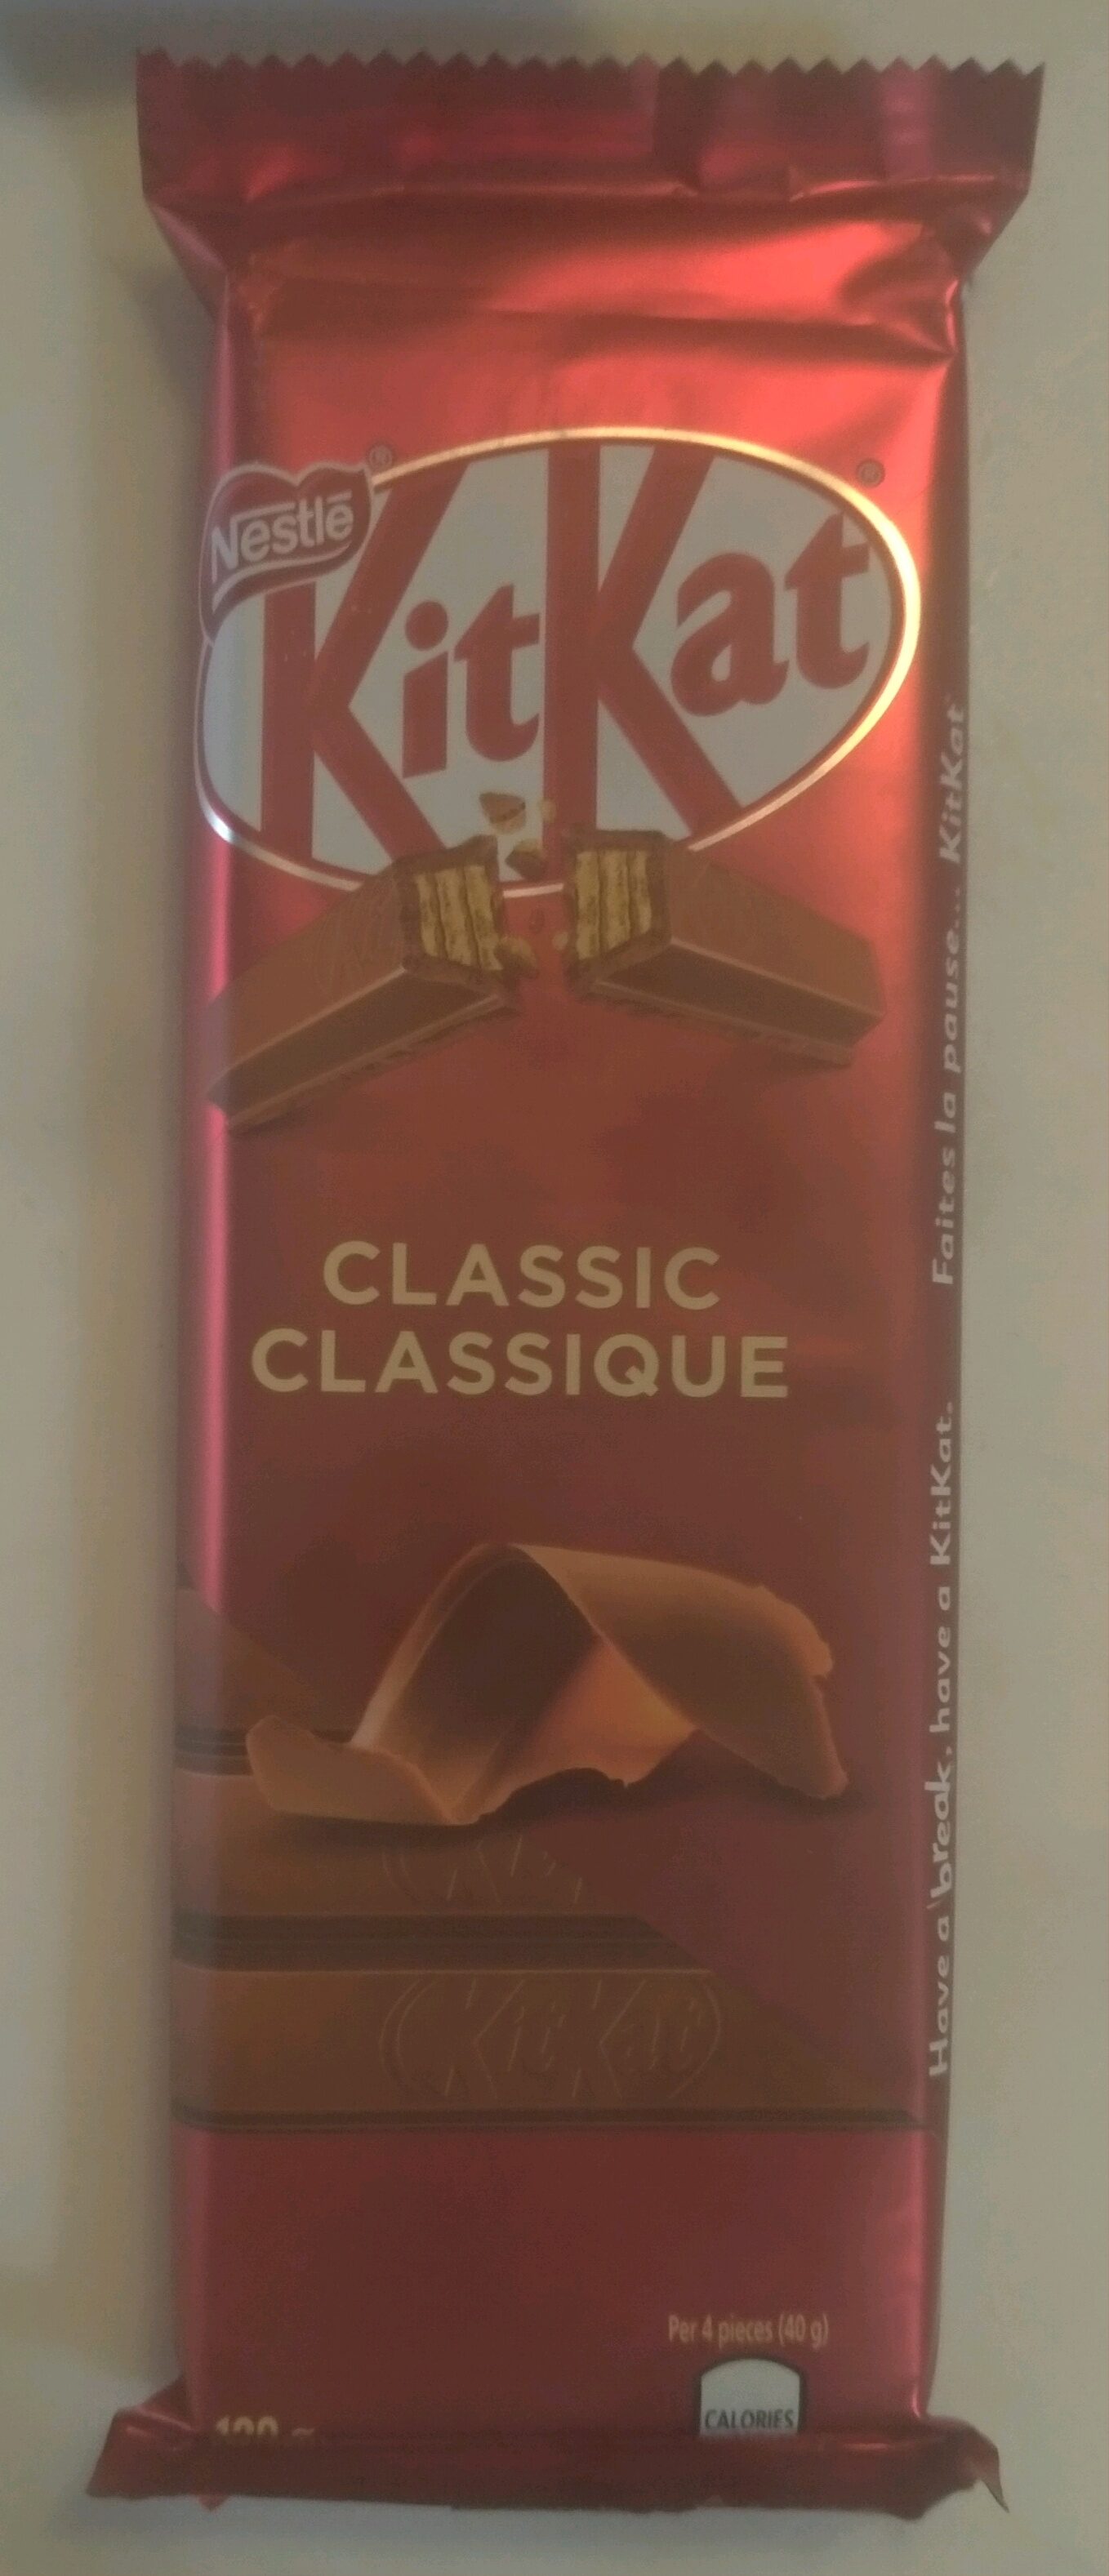 Classic KitKat - Product